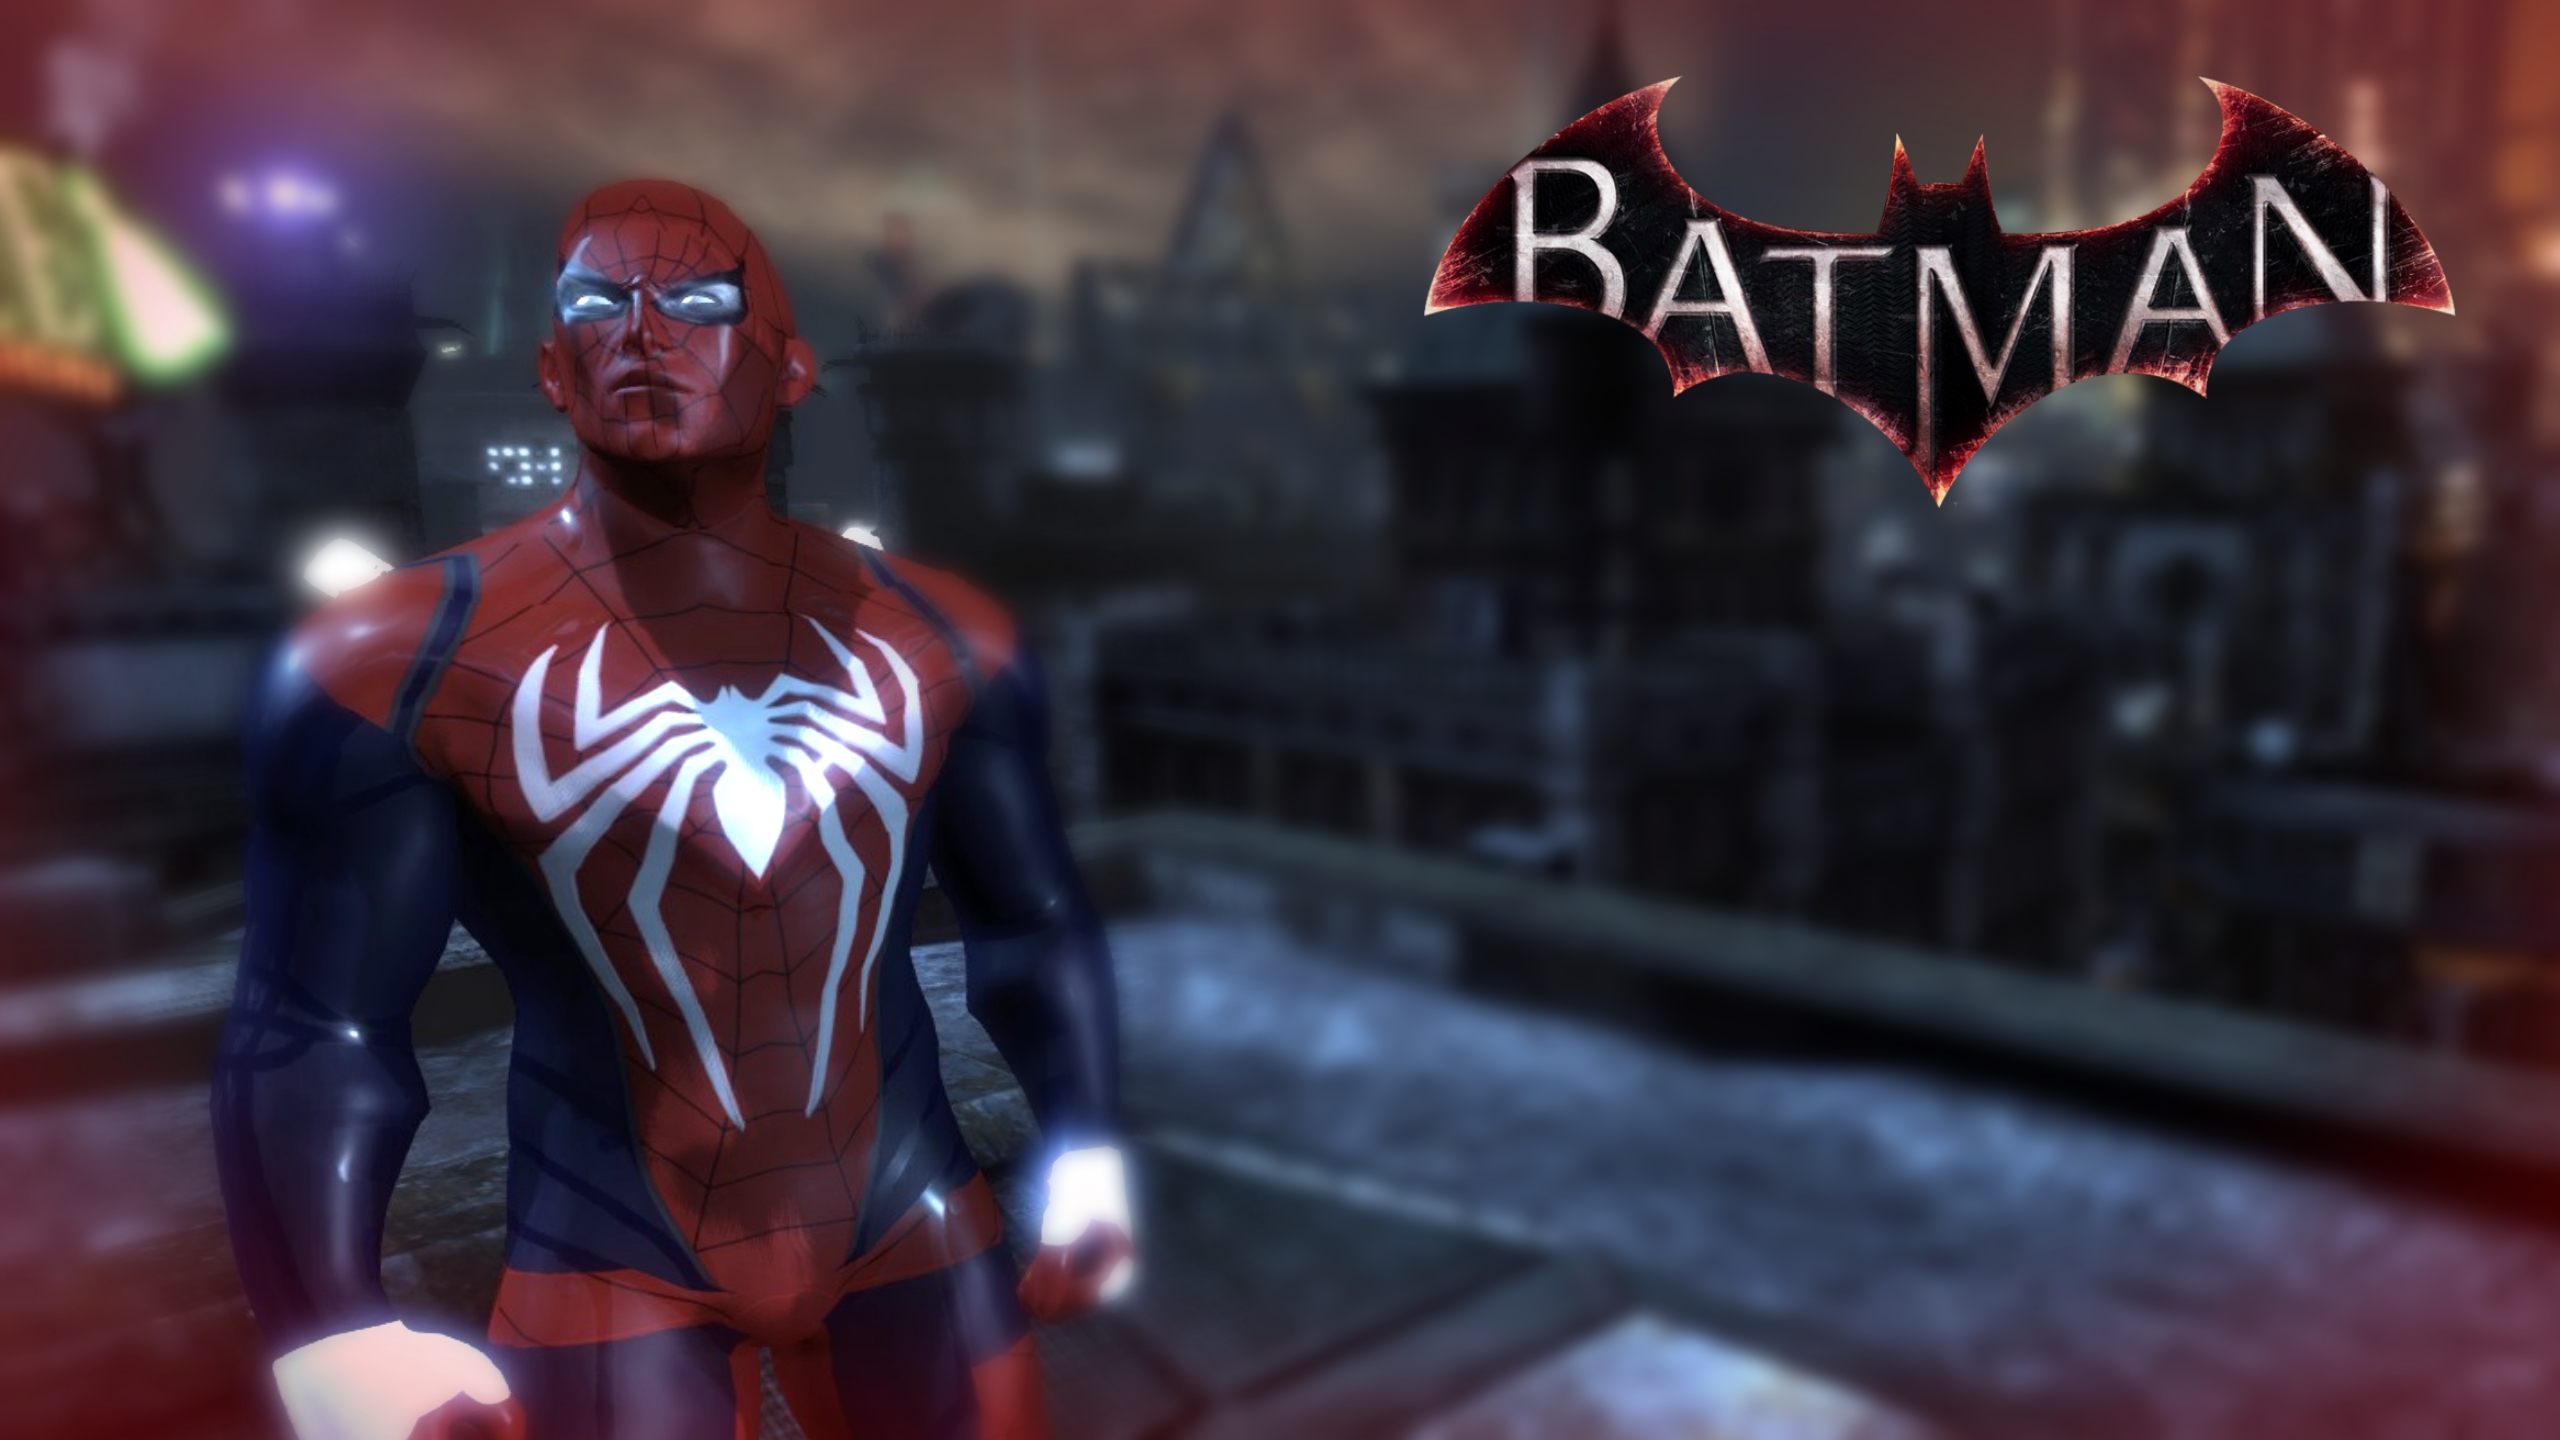 Spiderman PS4 skin mod for Batman Arkham City by thebatmanhimself on  DeviantArt